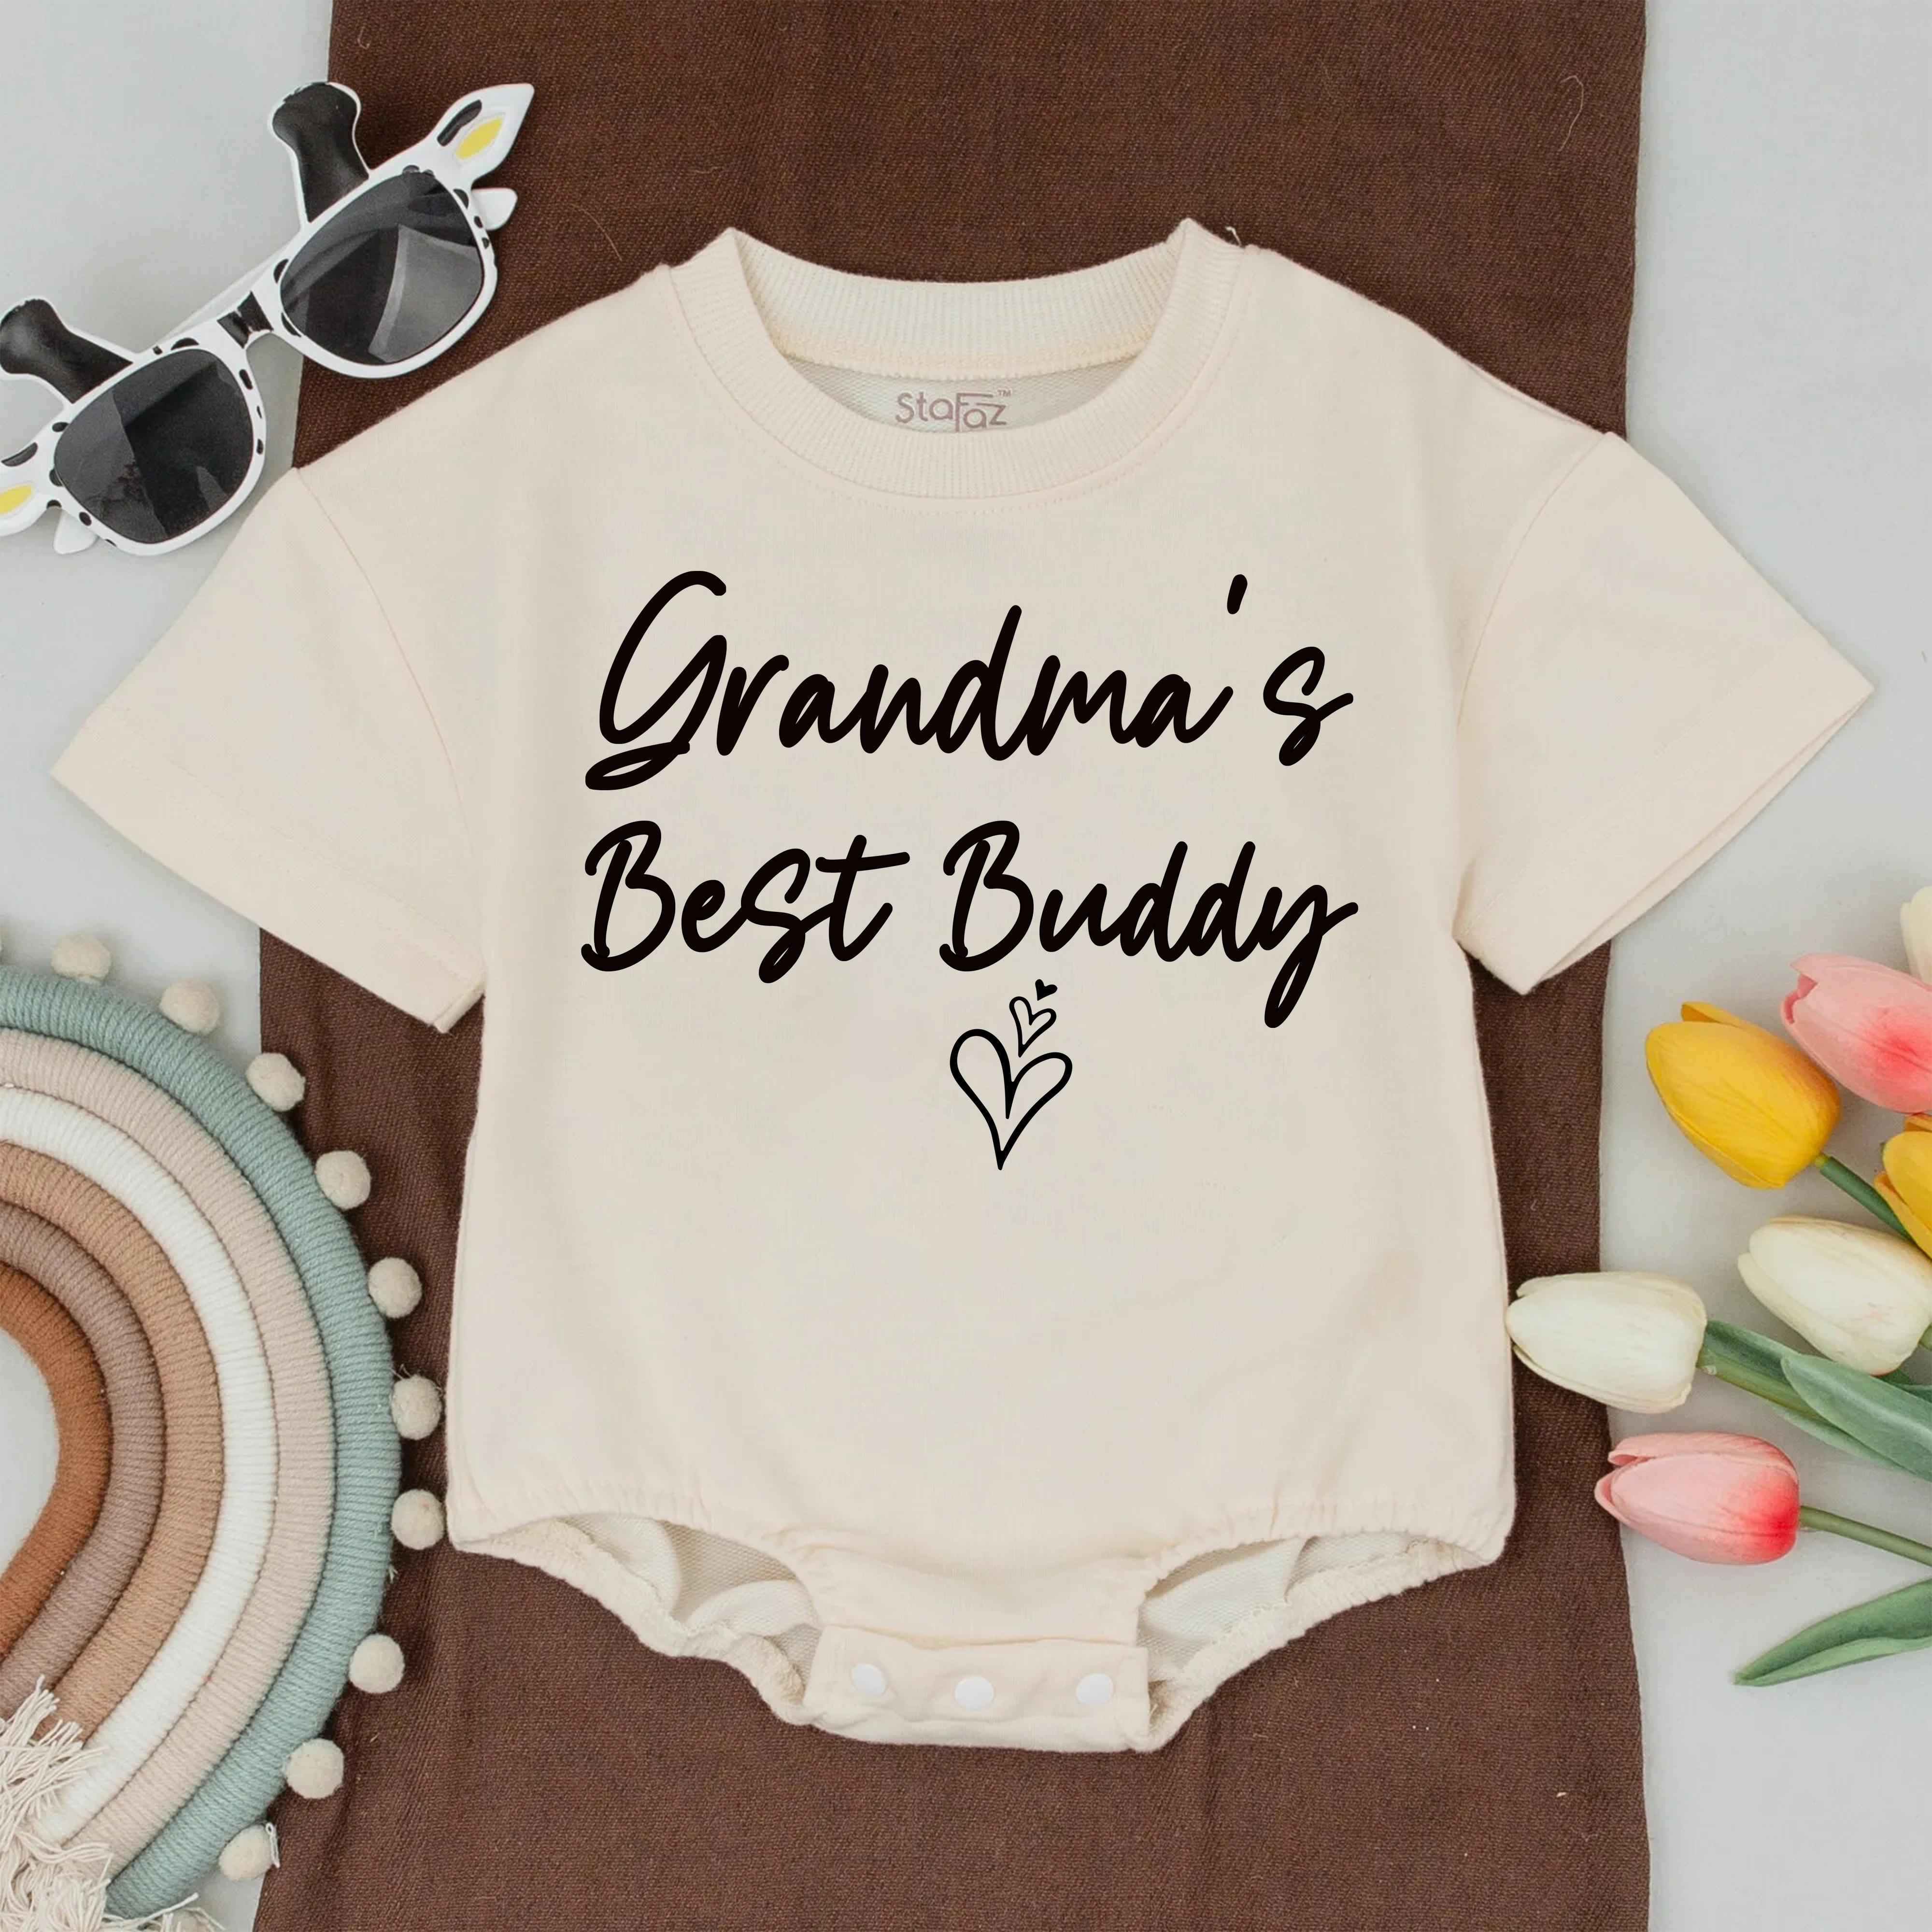 Grandma And Grandma's Best Buddy T-Shirt: Custom Grandmother Gift!